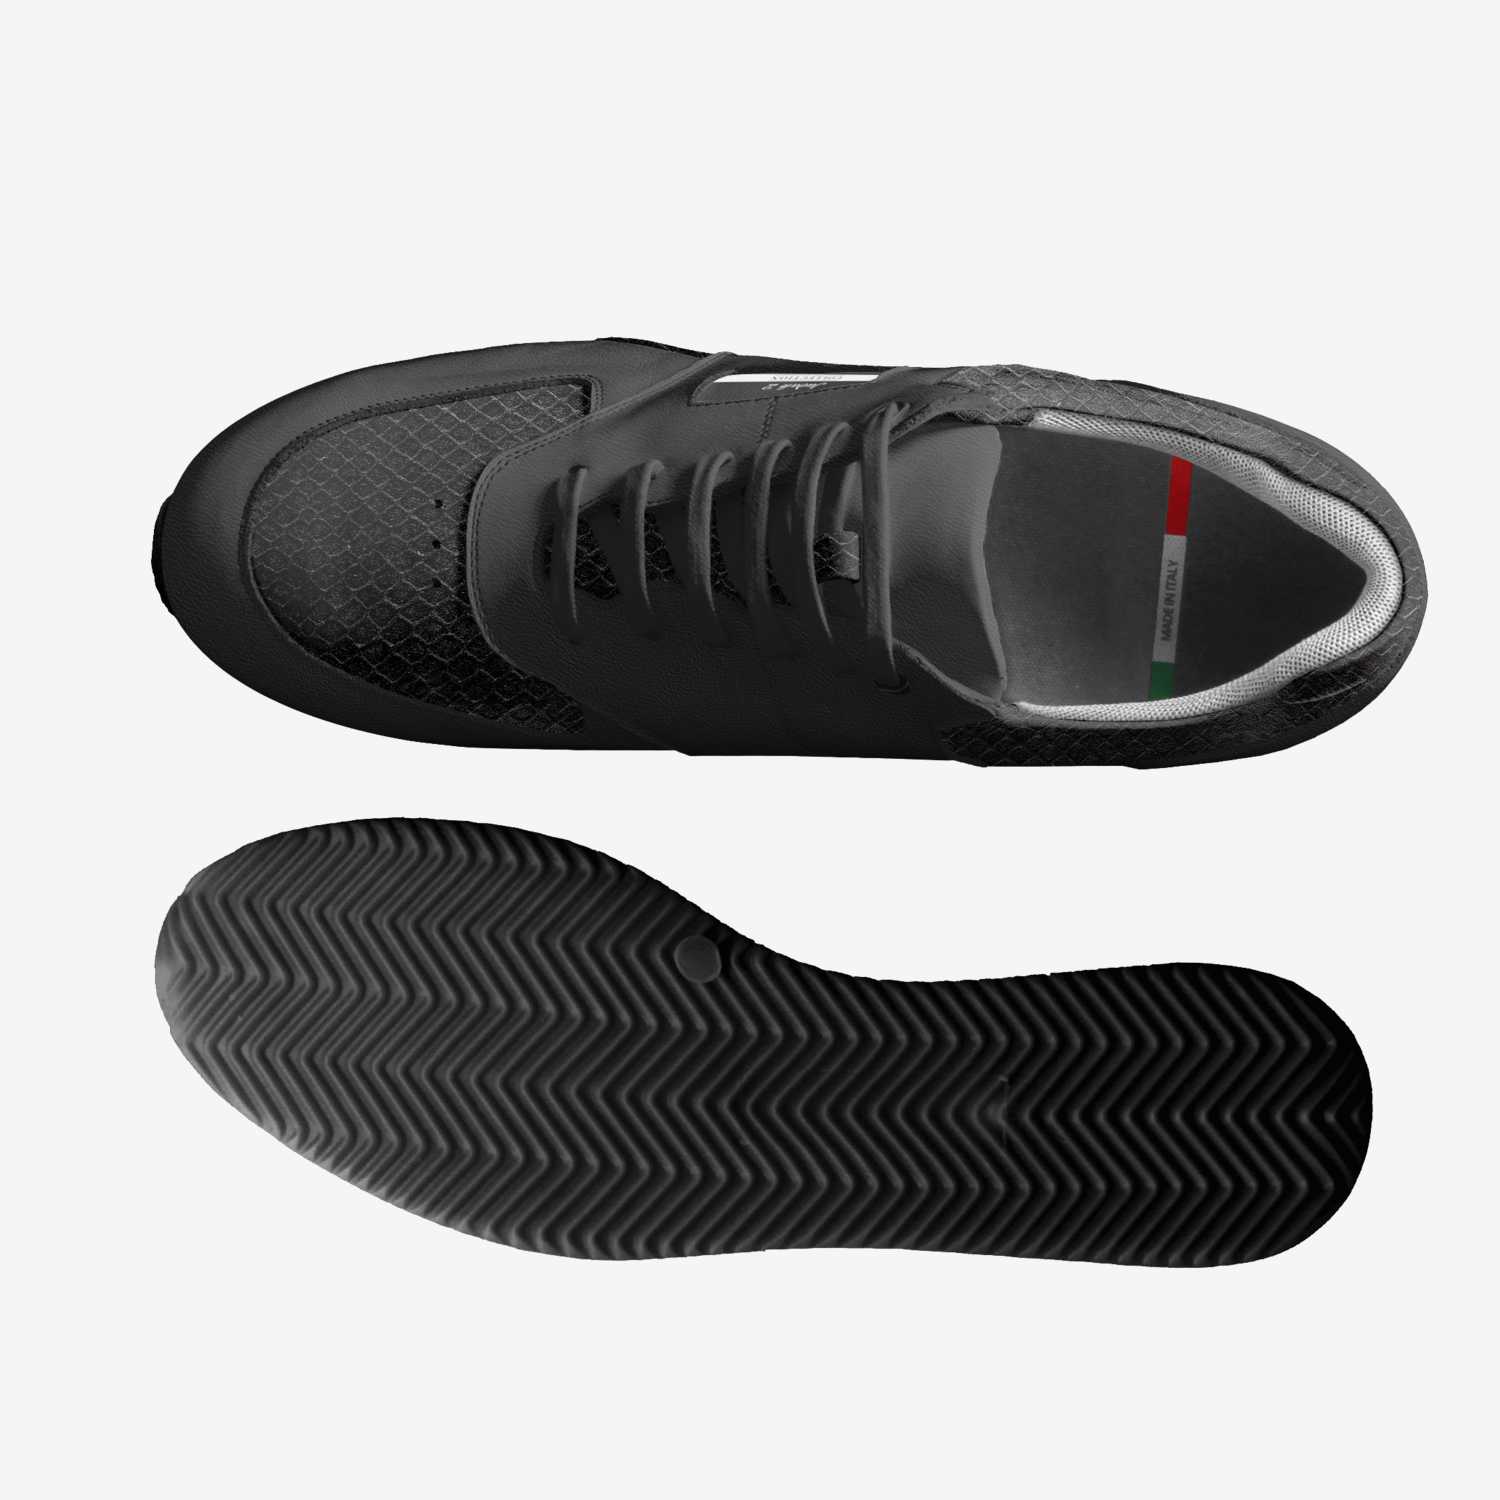 Judah 2 | A Custom Shoe concept by Dante Fortson